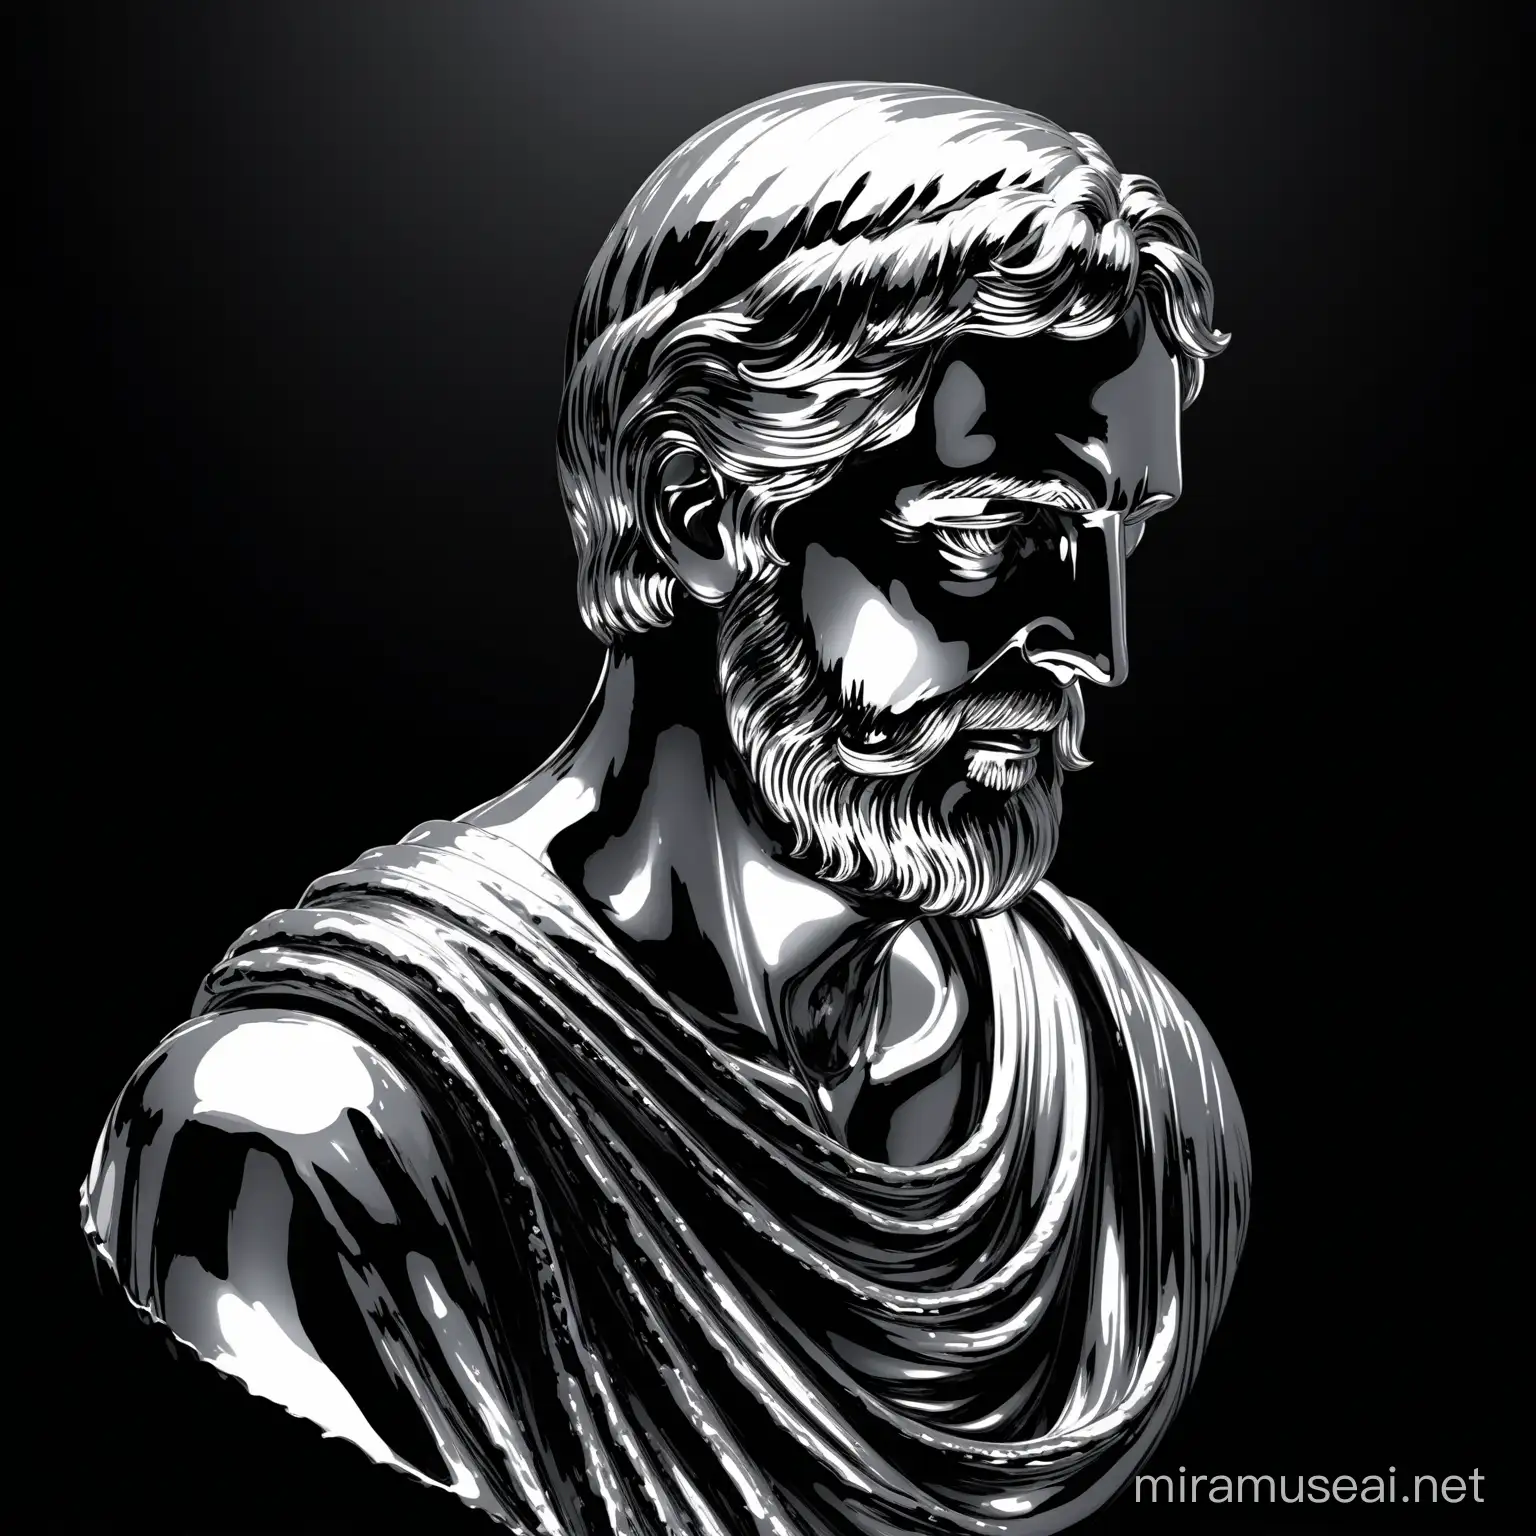 Ancient Roman Philosopher Statue in Liquid Silver on Black Background